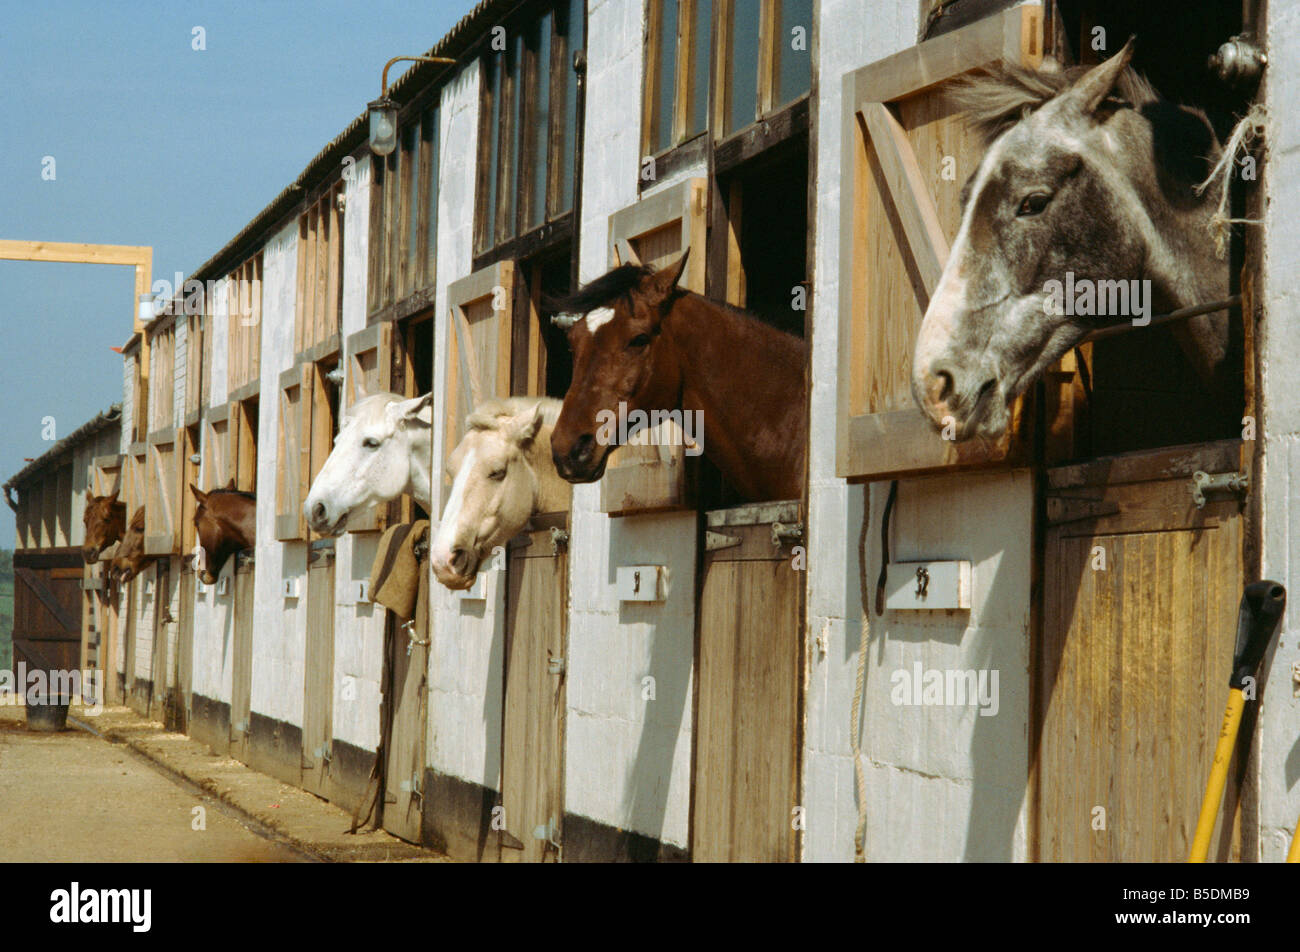 Establos para caballos fotografías e imágenes de alta resolución - Alamy